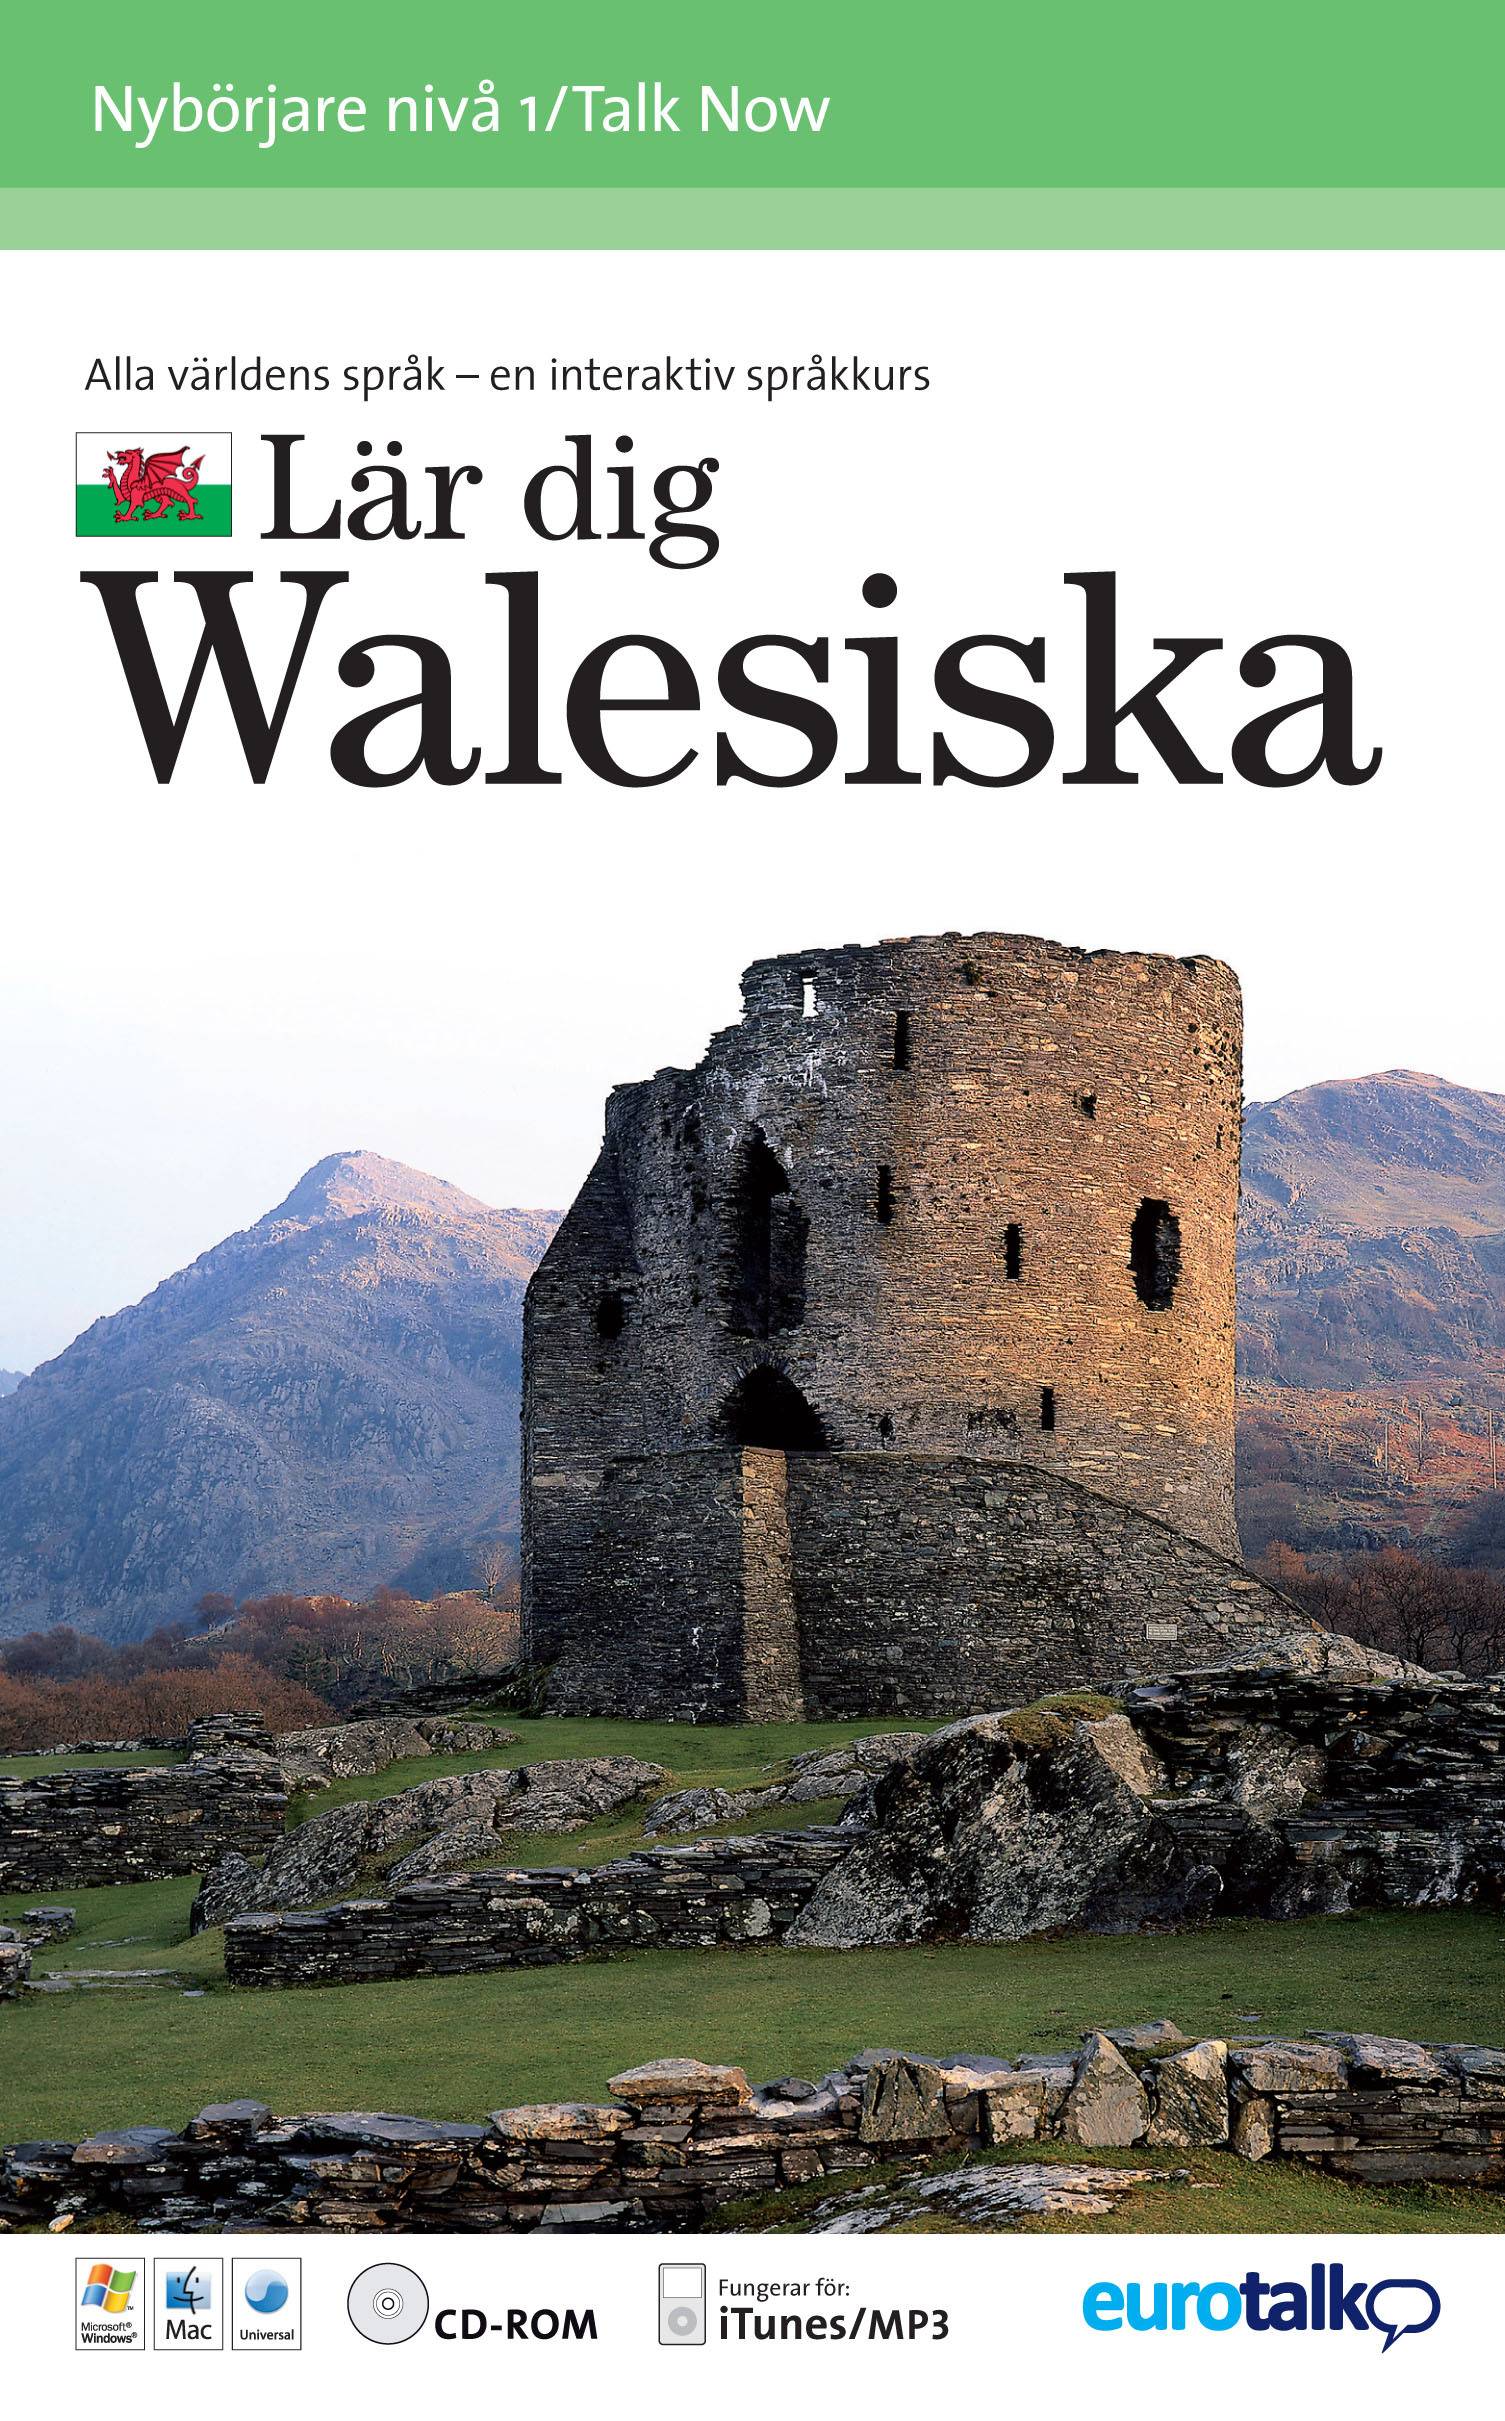 Talk now! Walesiska